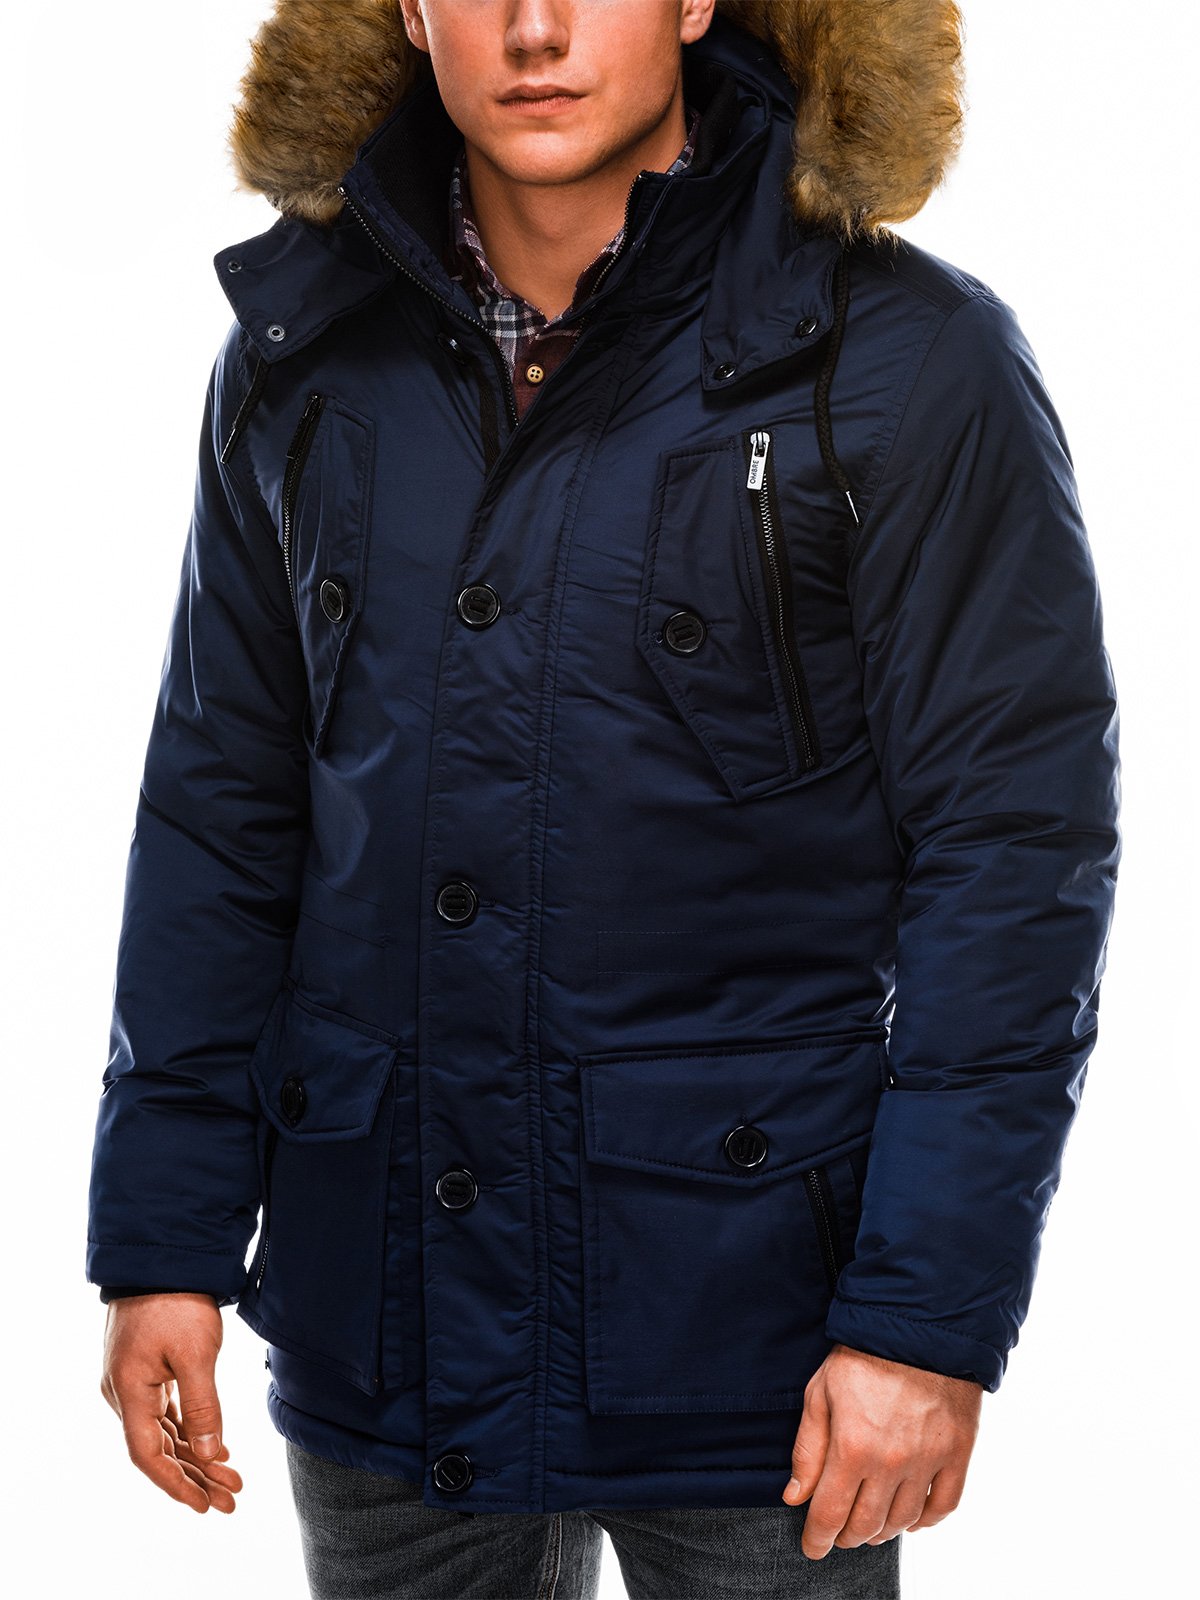 Men's winter parka jacket - navy C361 | MODONE wholesale - Clothing For Men